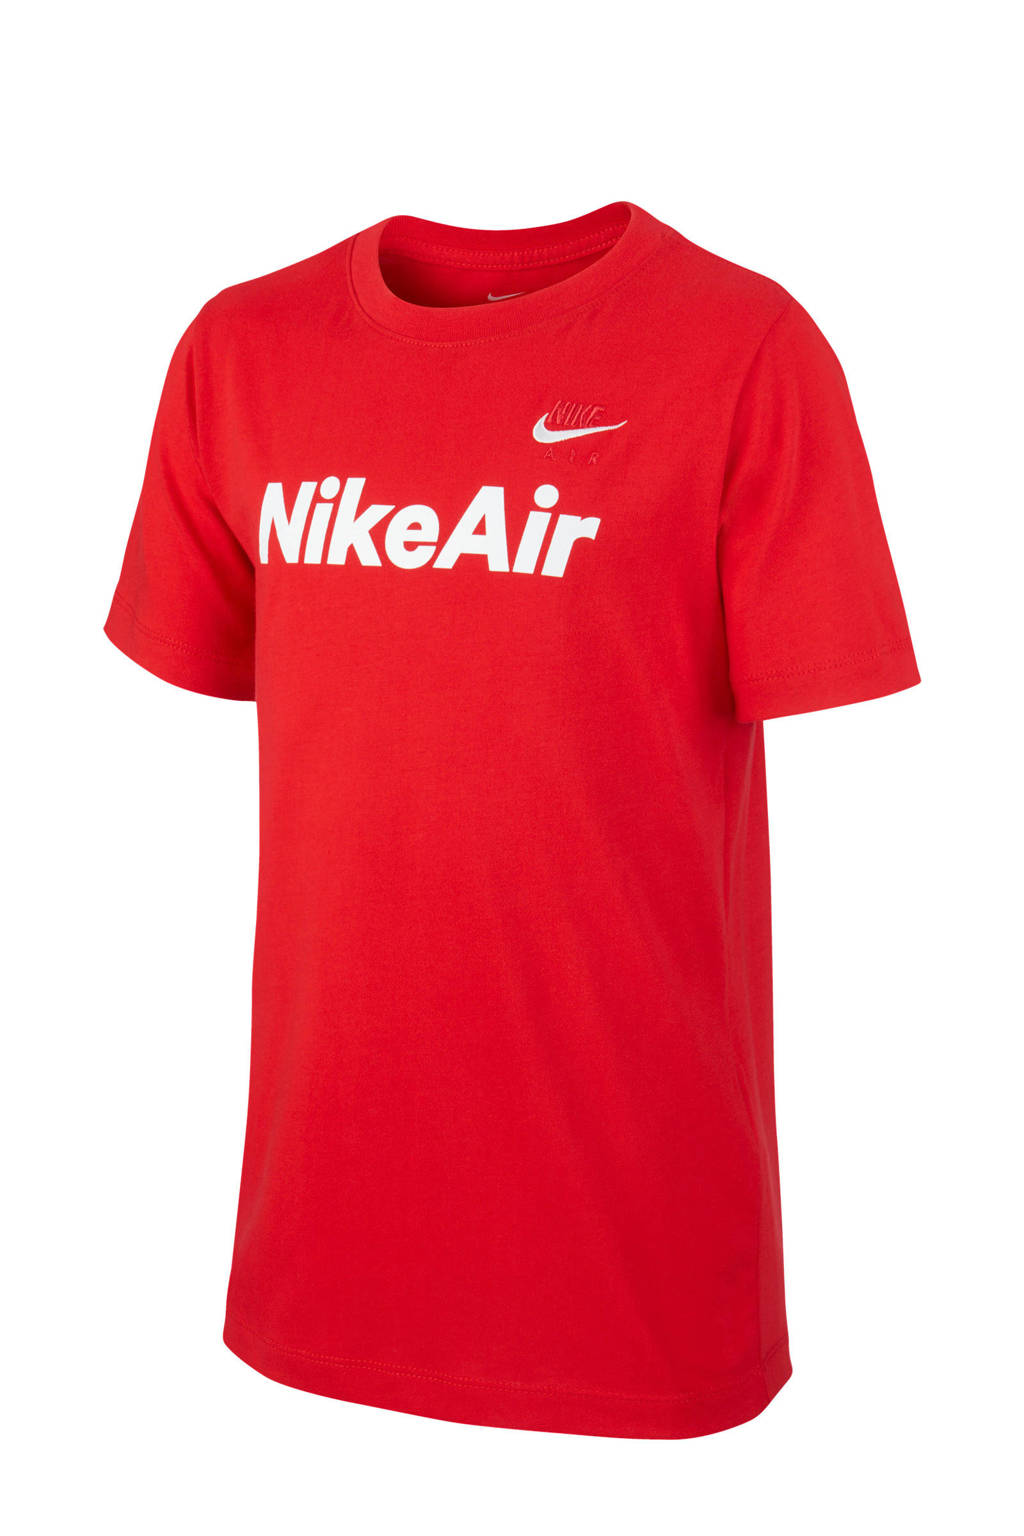 Nike T-shirt rood, Rood